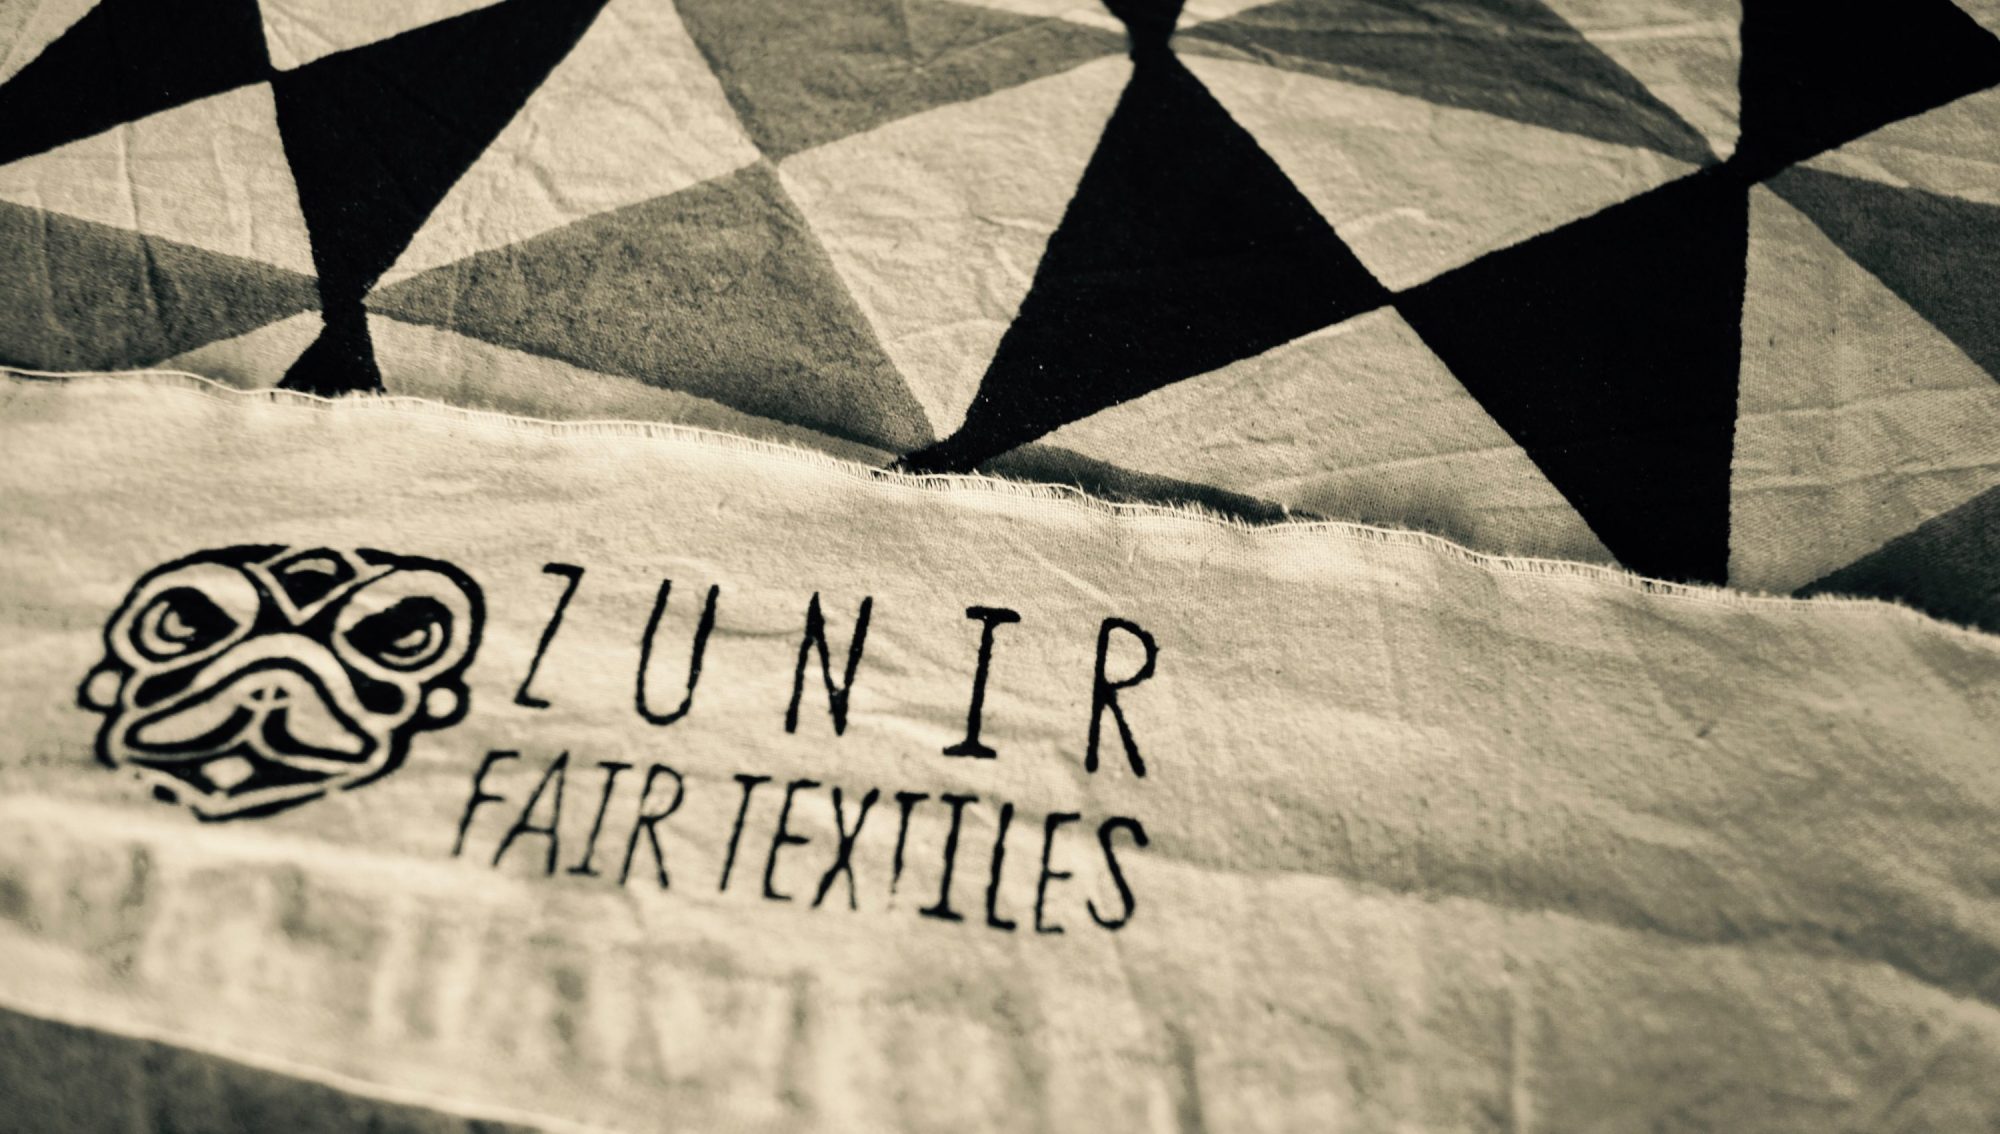 Zunir Fair Textiles